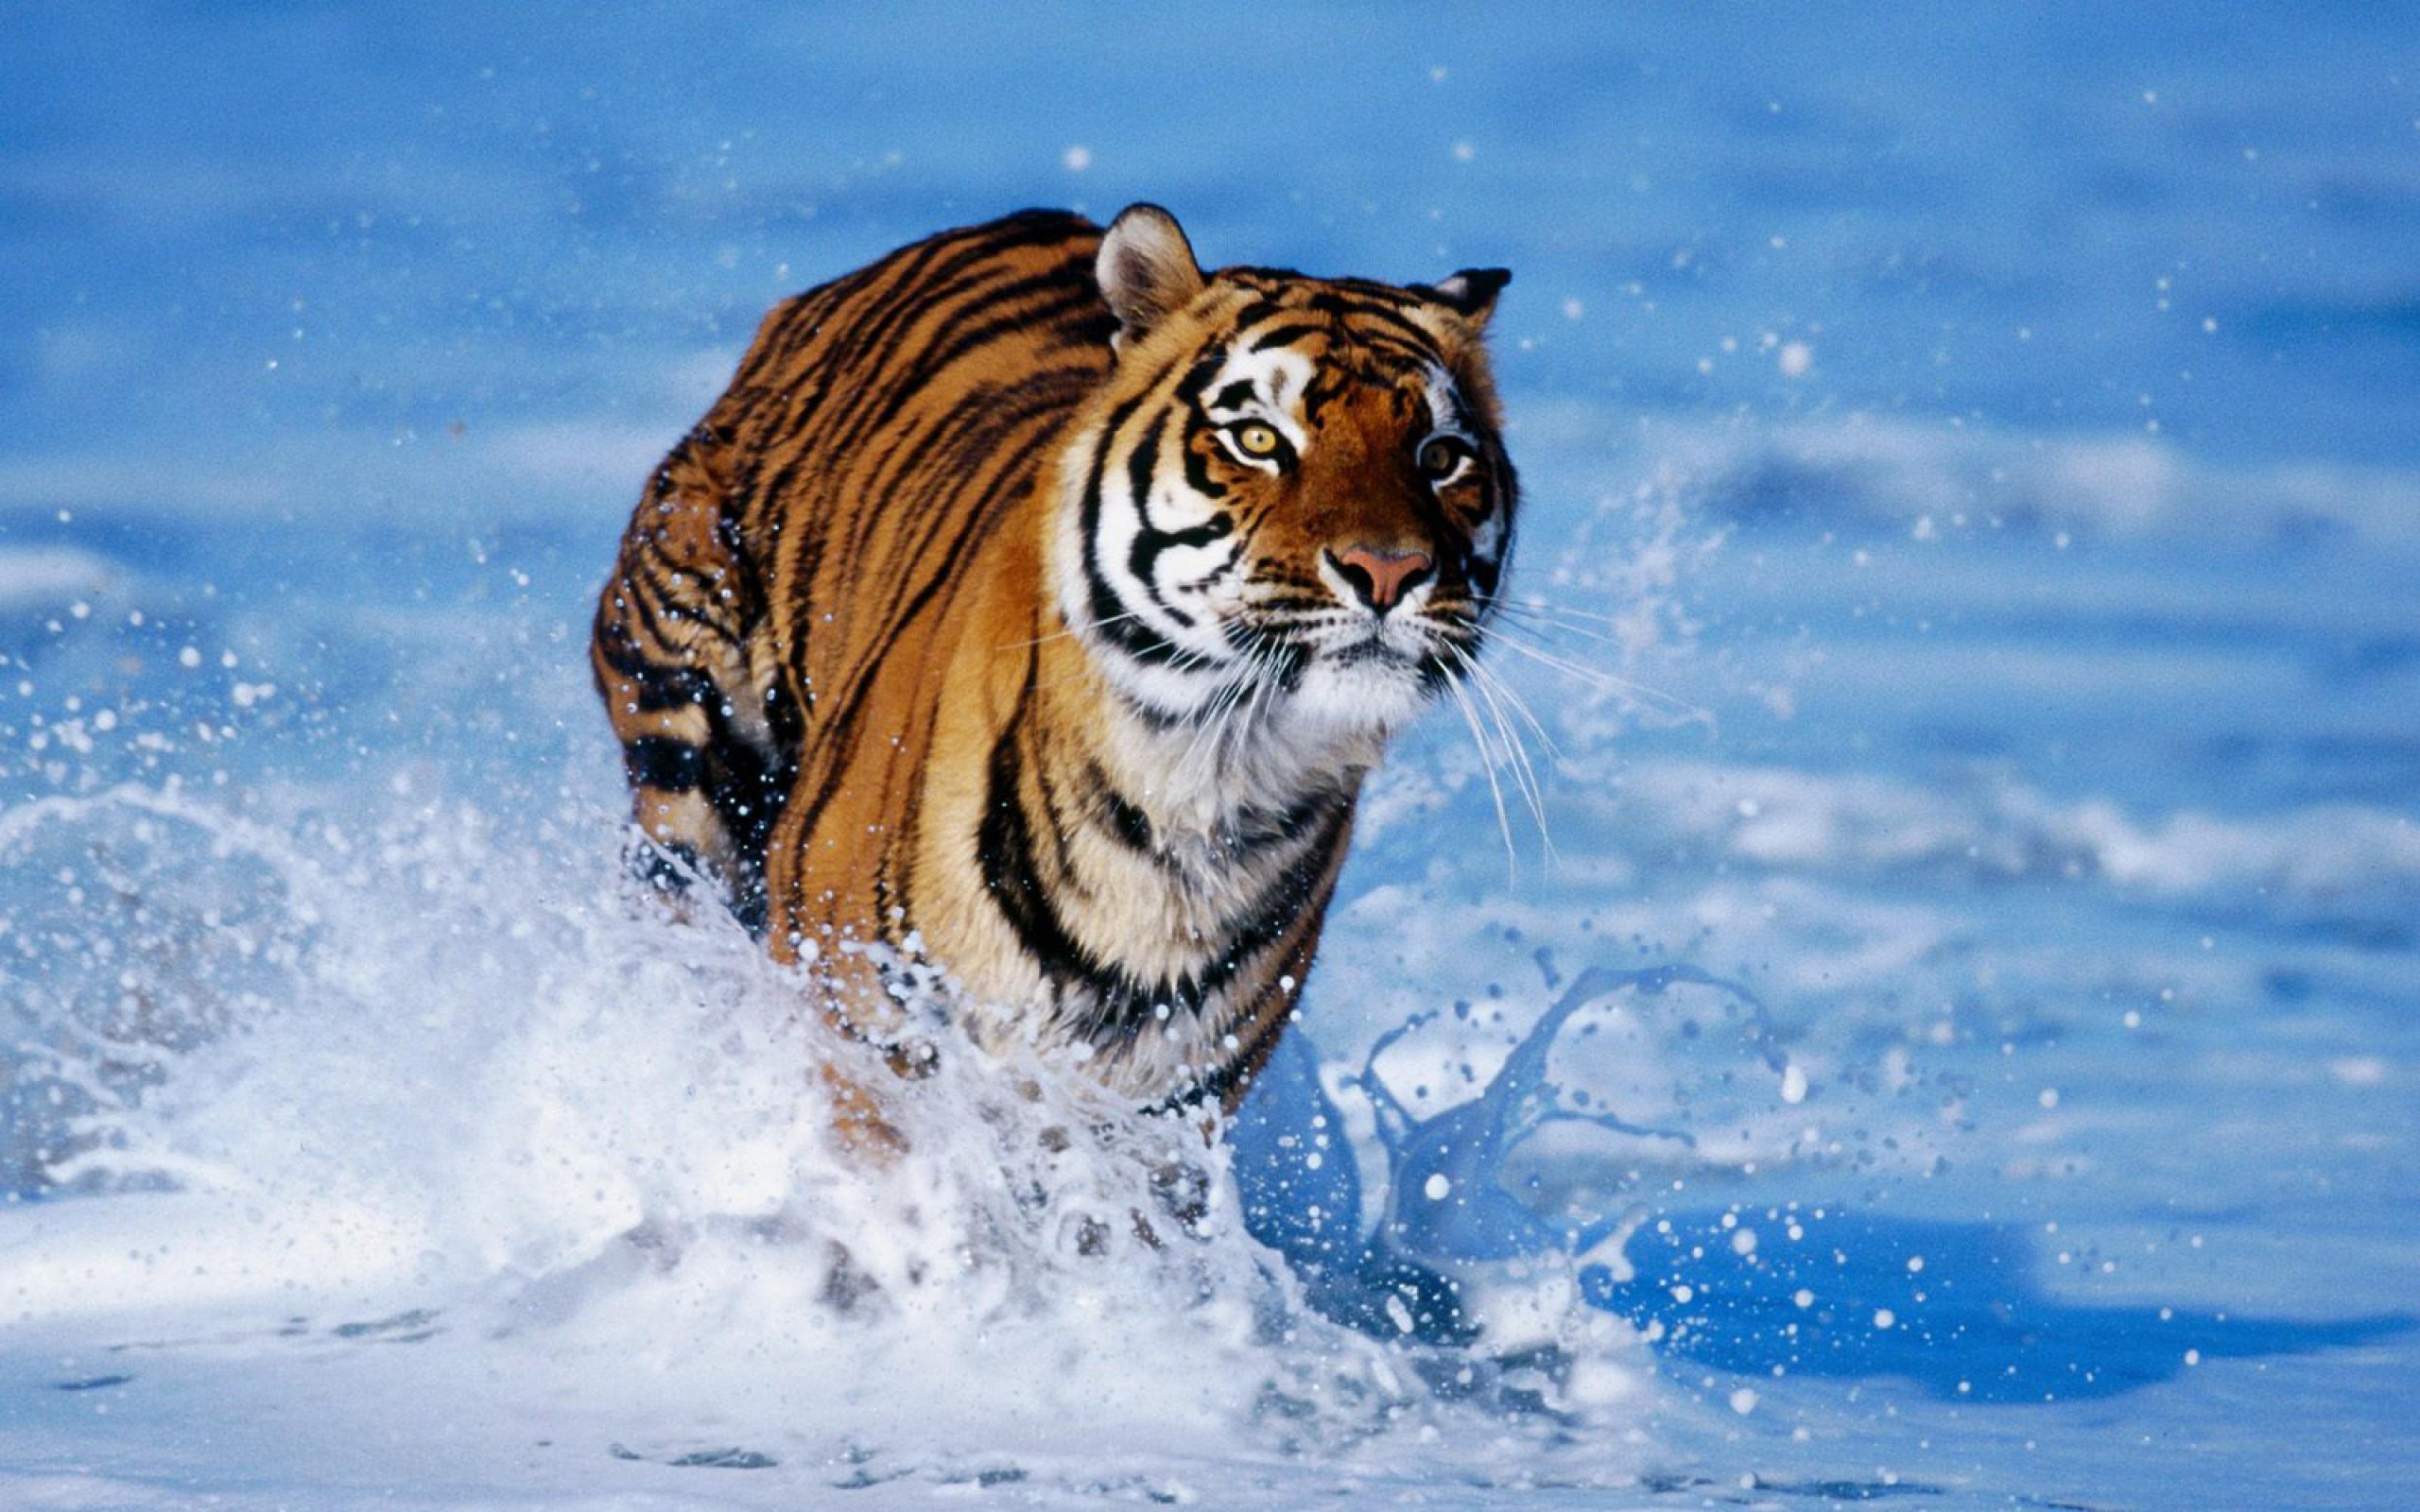 Tiger runs through the water